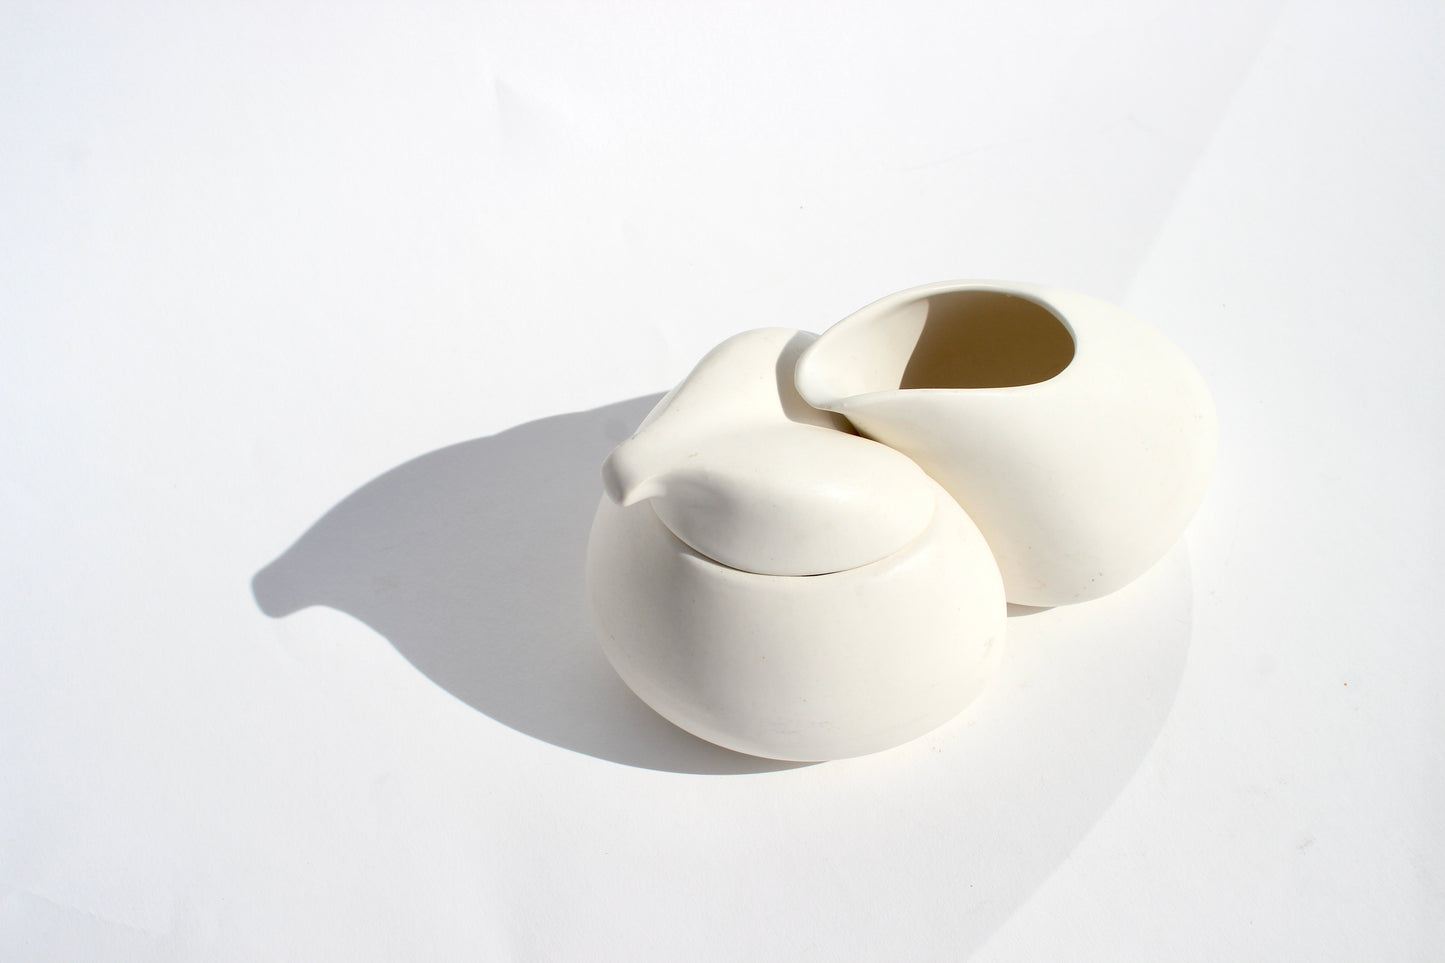 modernist sculptural sugar + cream set